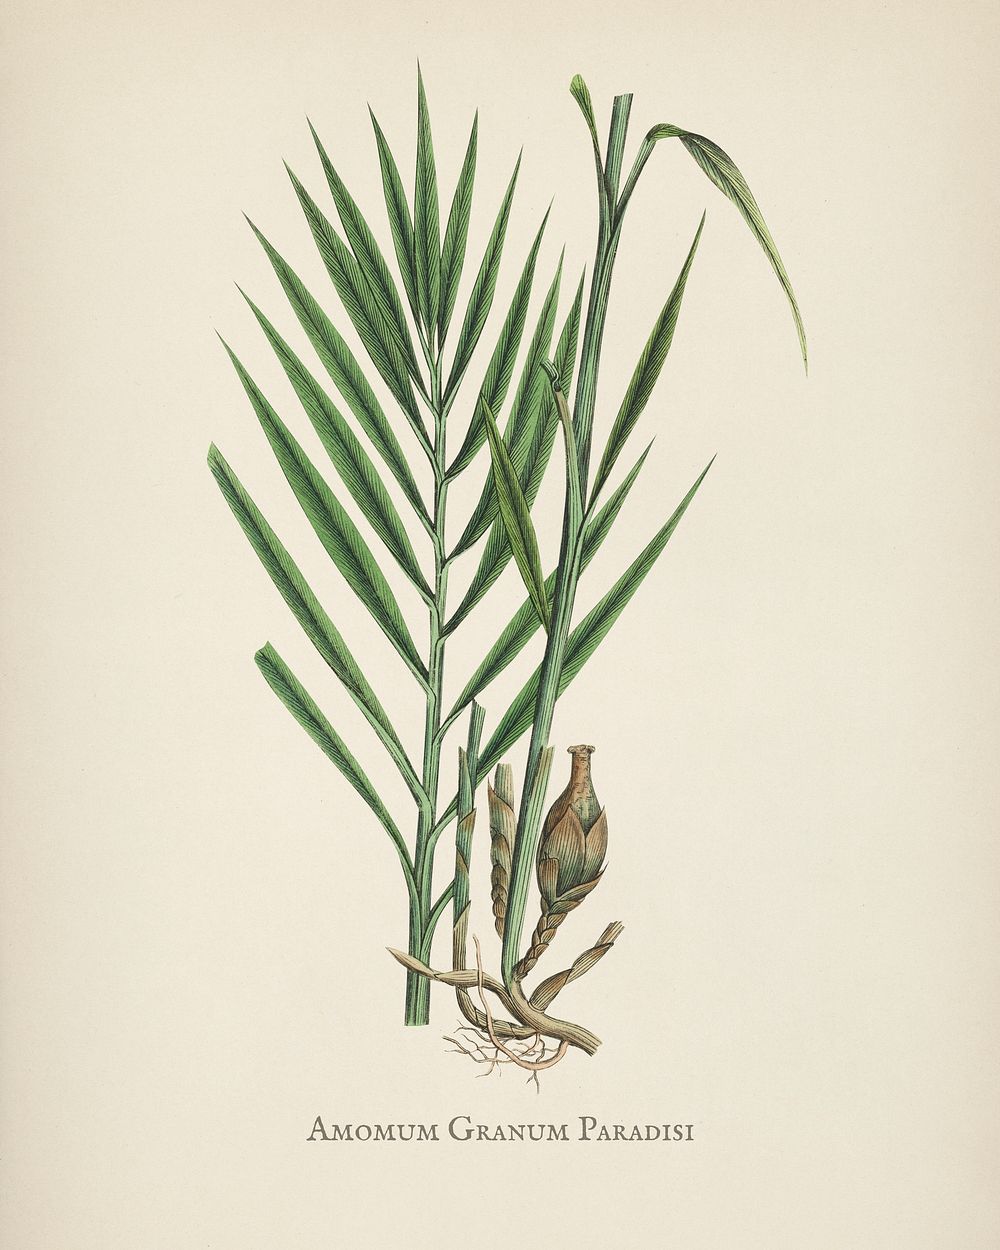 Amomum (Amomum granum) paradisi illustration from Medical Botany (1836) by John Stephenson and James Morss Churchill.